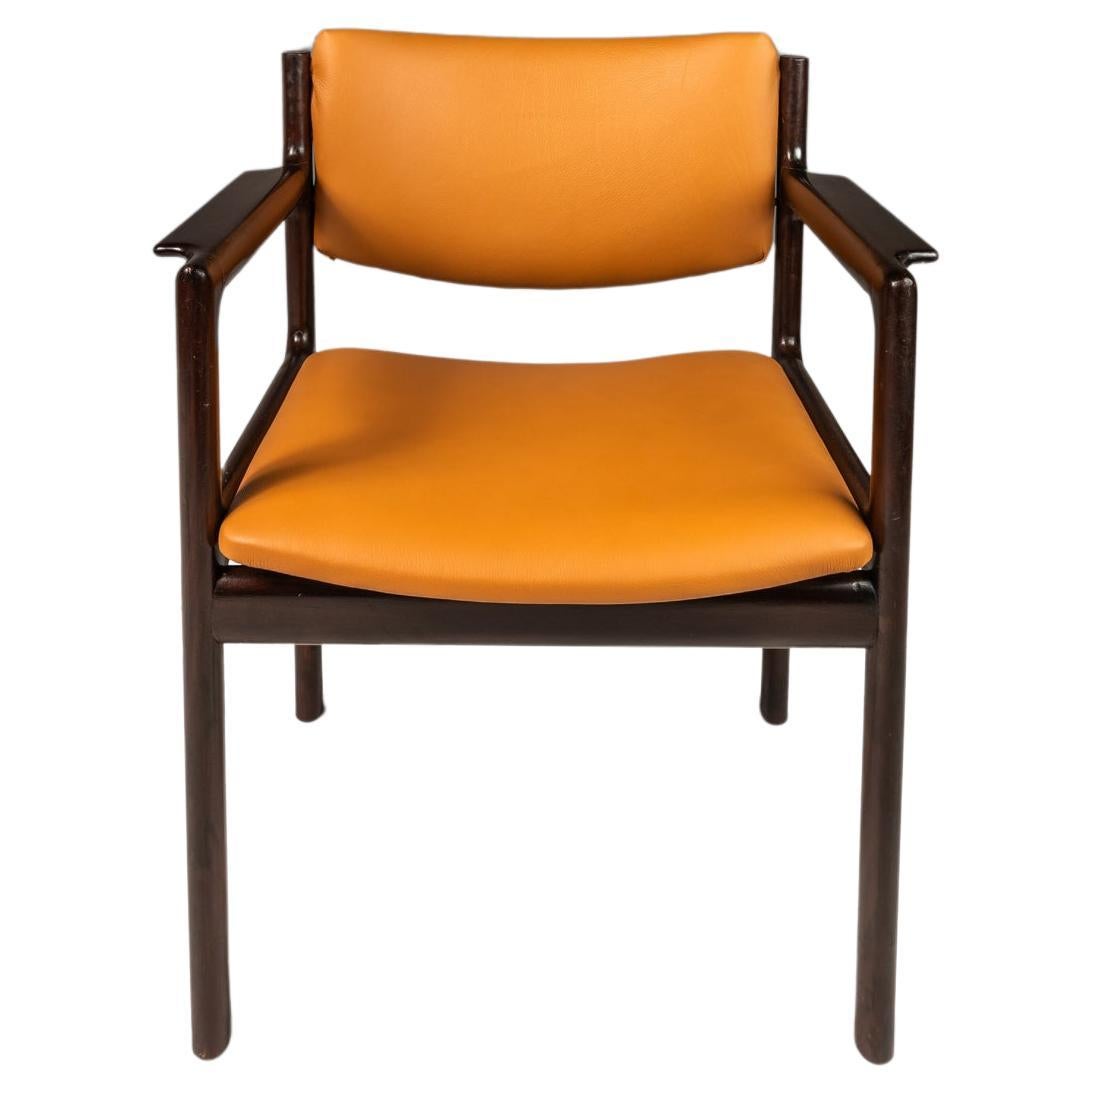 Danish Modern Mahogany & Leather Arm Chair, Danish Overseas Imports, c. 1960's For Sale